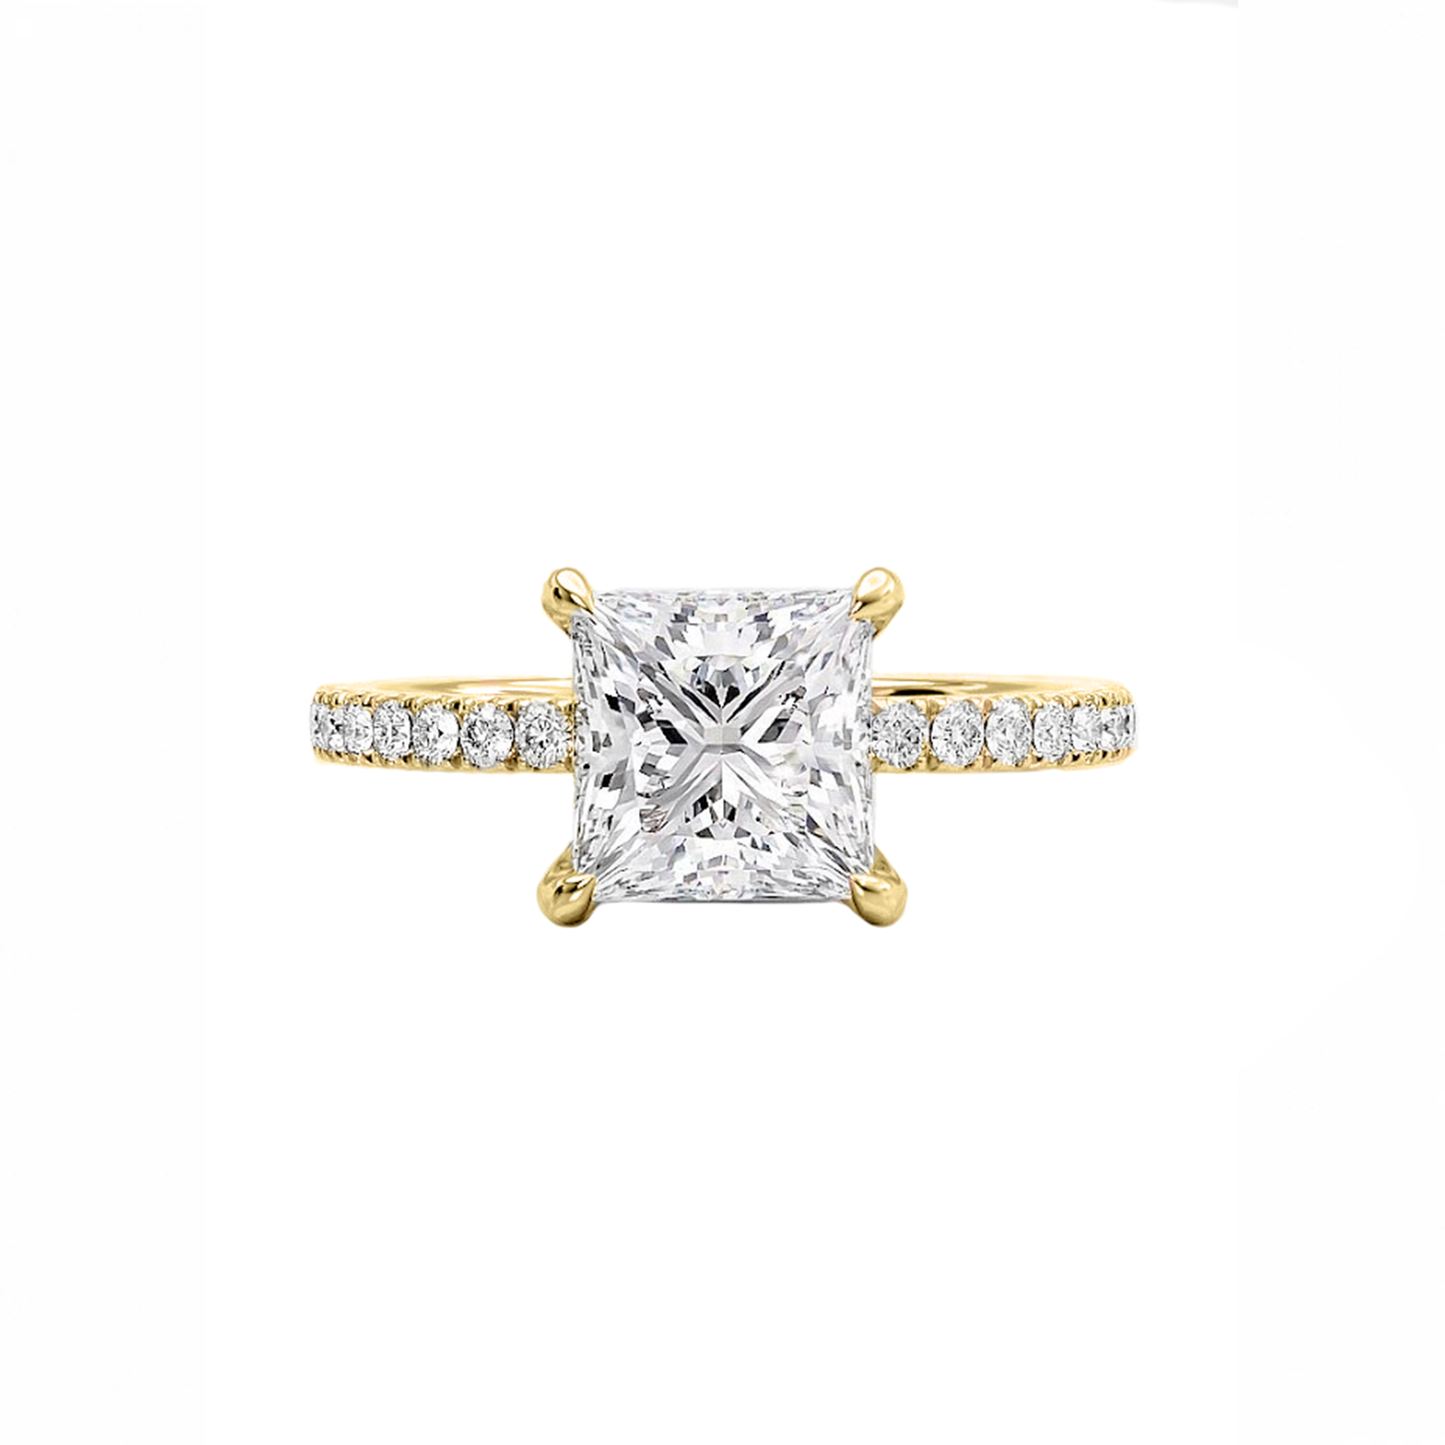 Princess Cut Diamond Ring With Side Stones